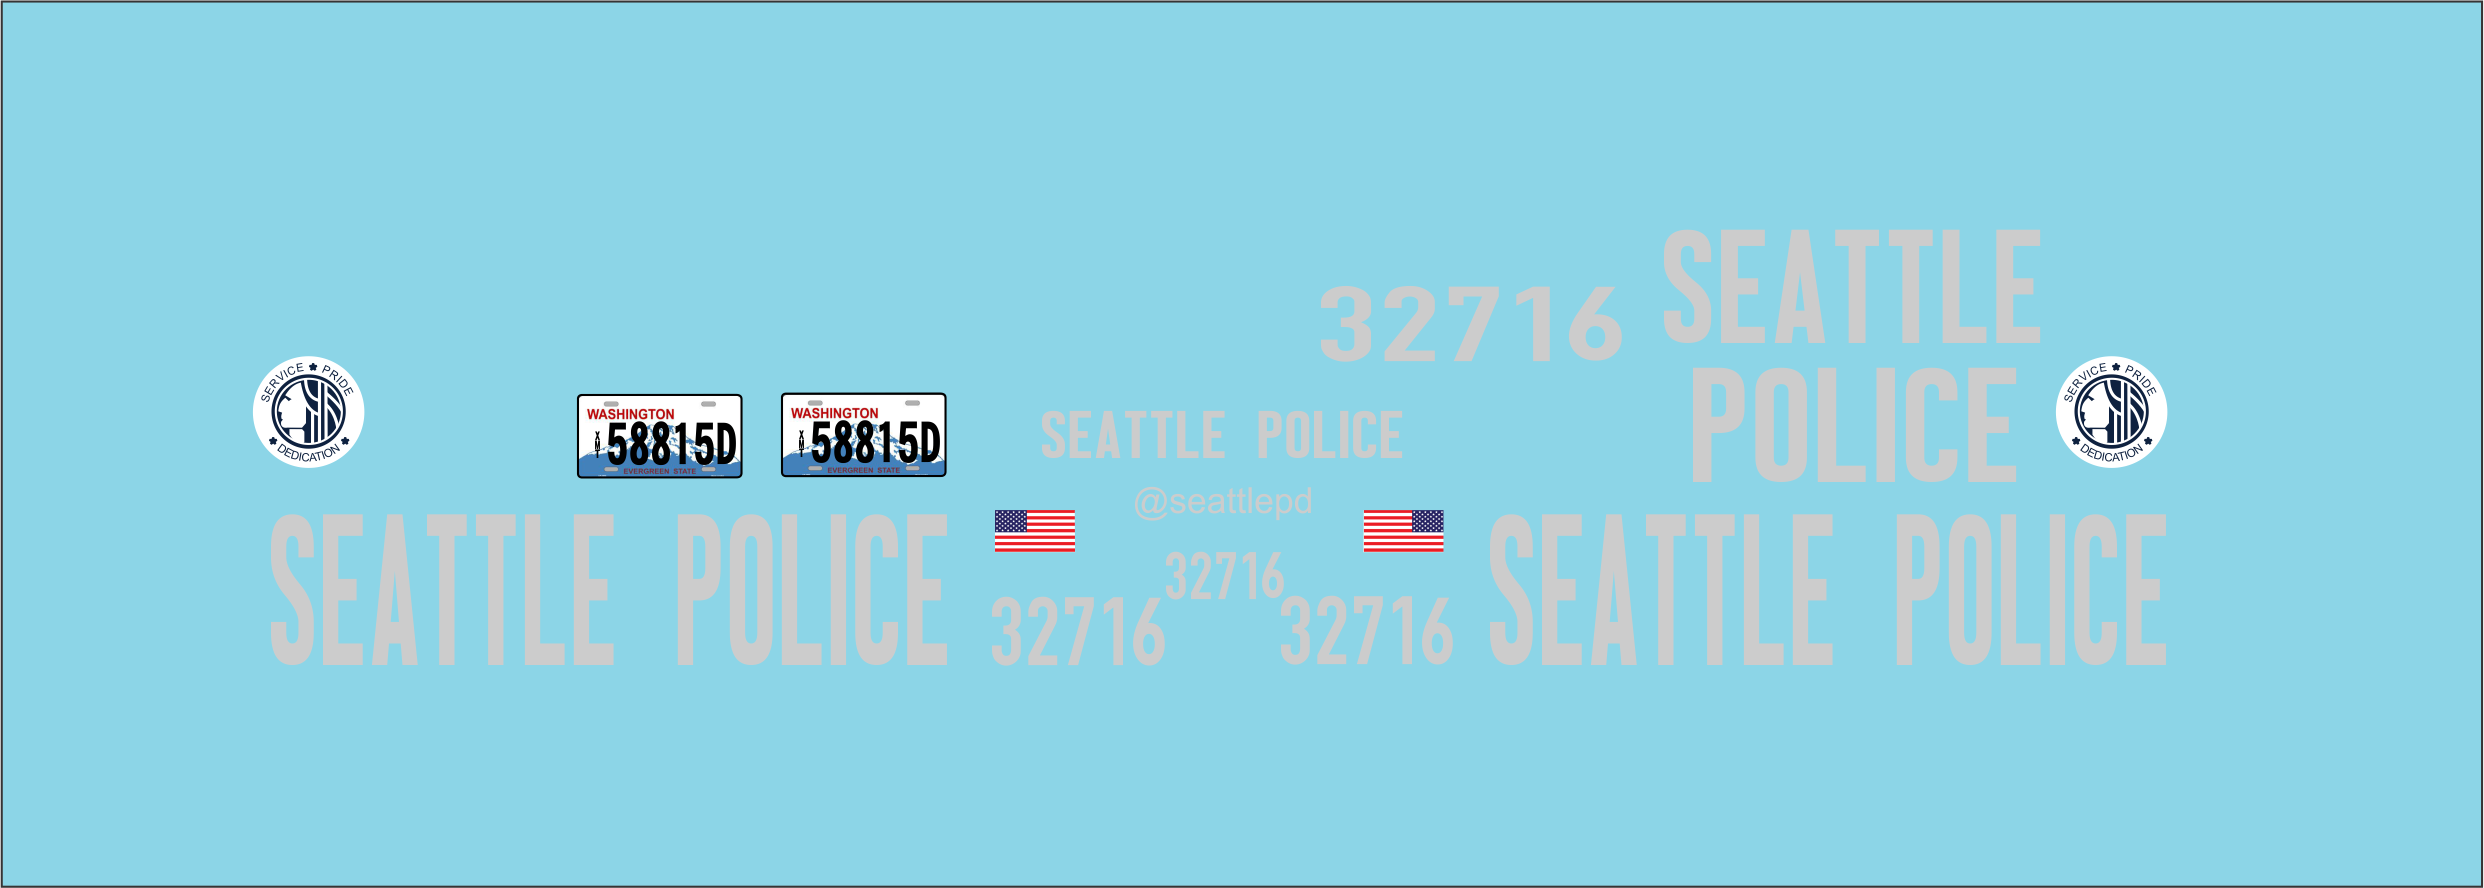 1/24-1/25 Seattle, Washington Police Department waterslide decals